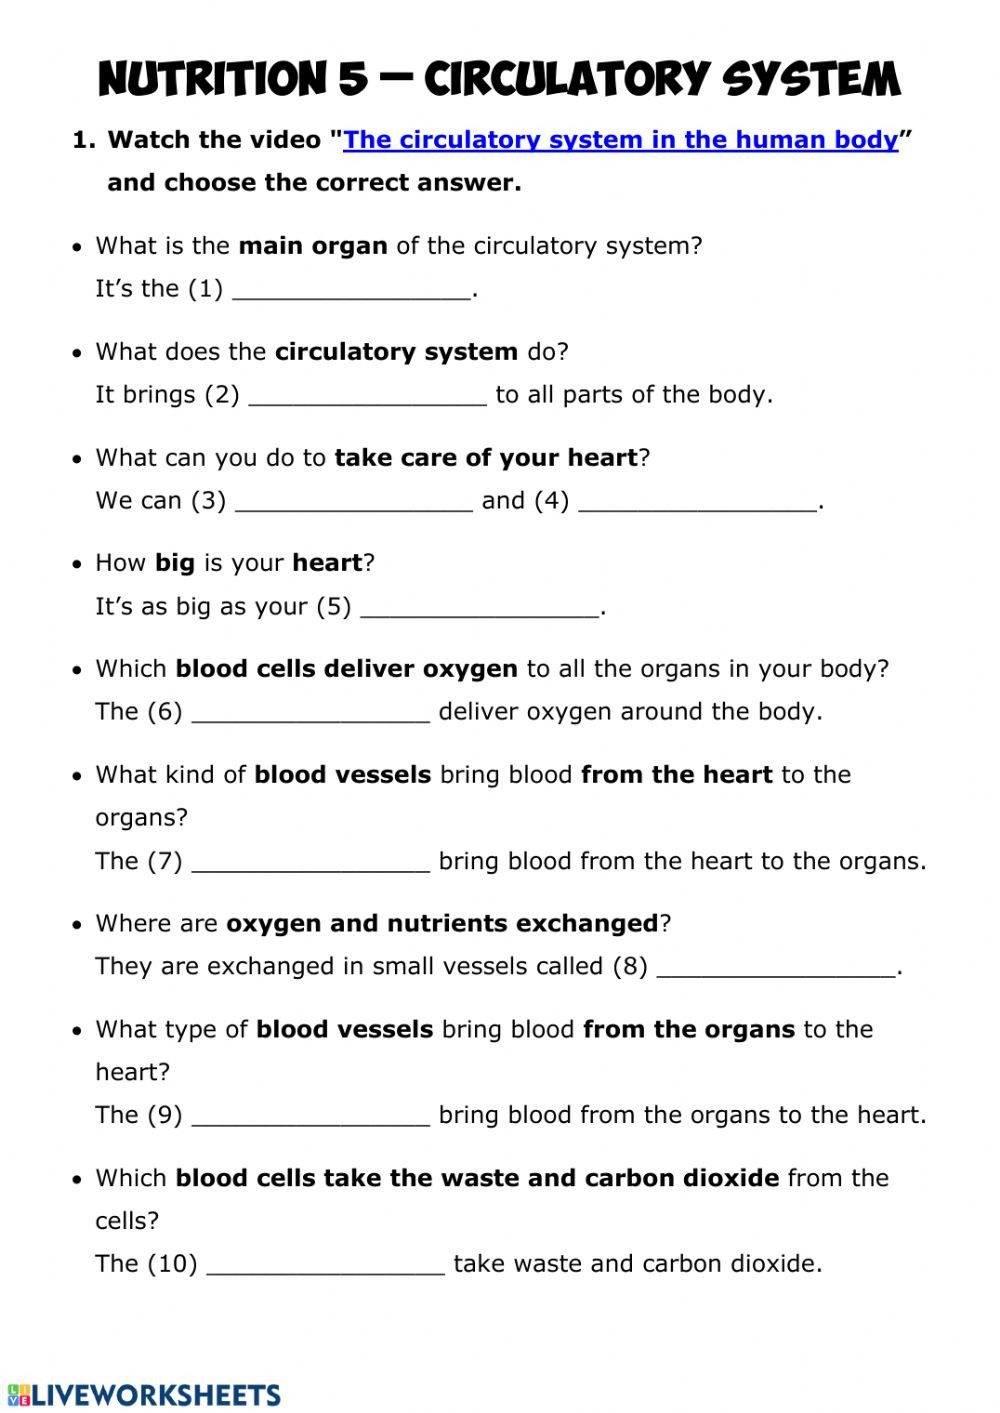 Circulatory System Worksheet Pdf Nutrition 5 Circulatory System Circulatory System Worksheet